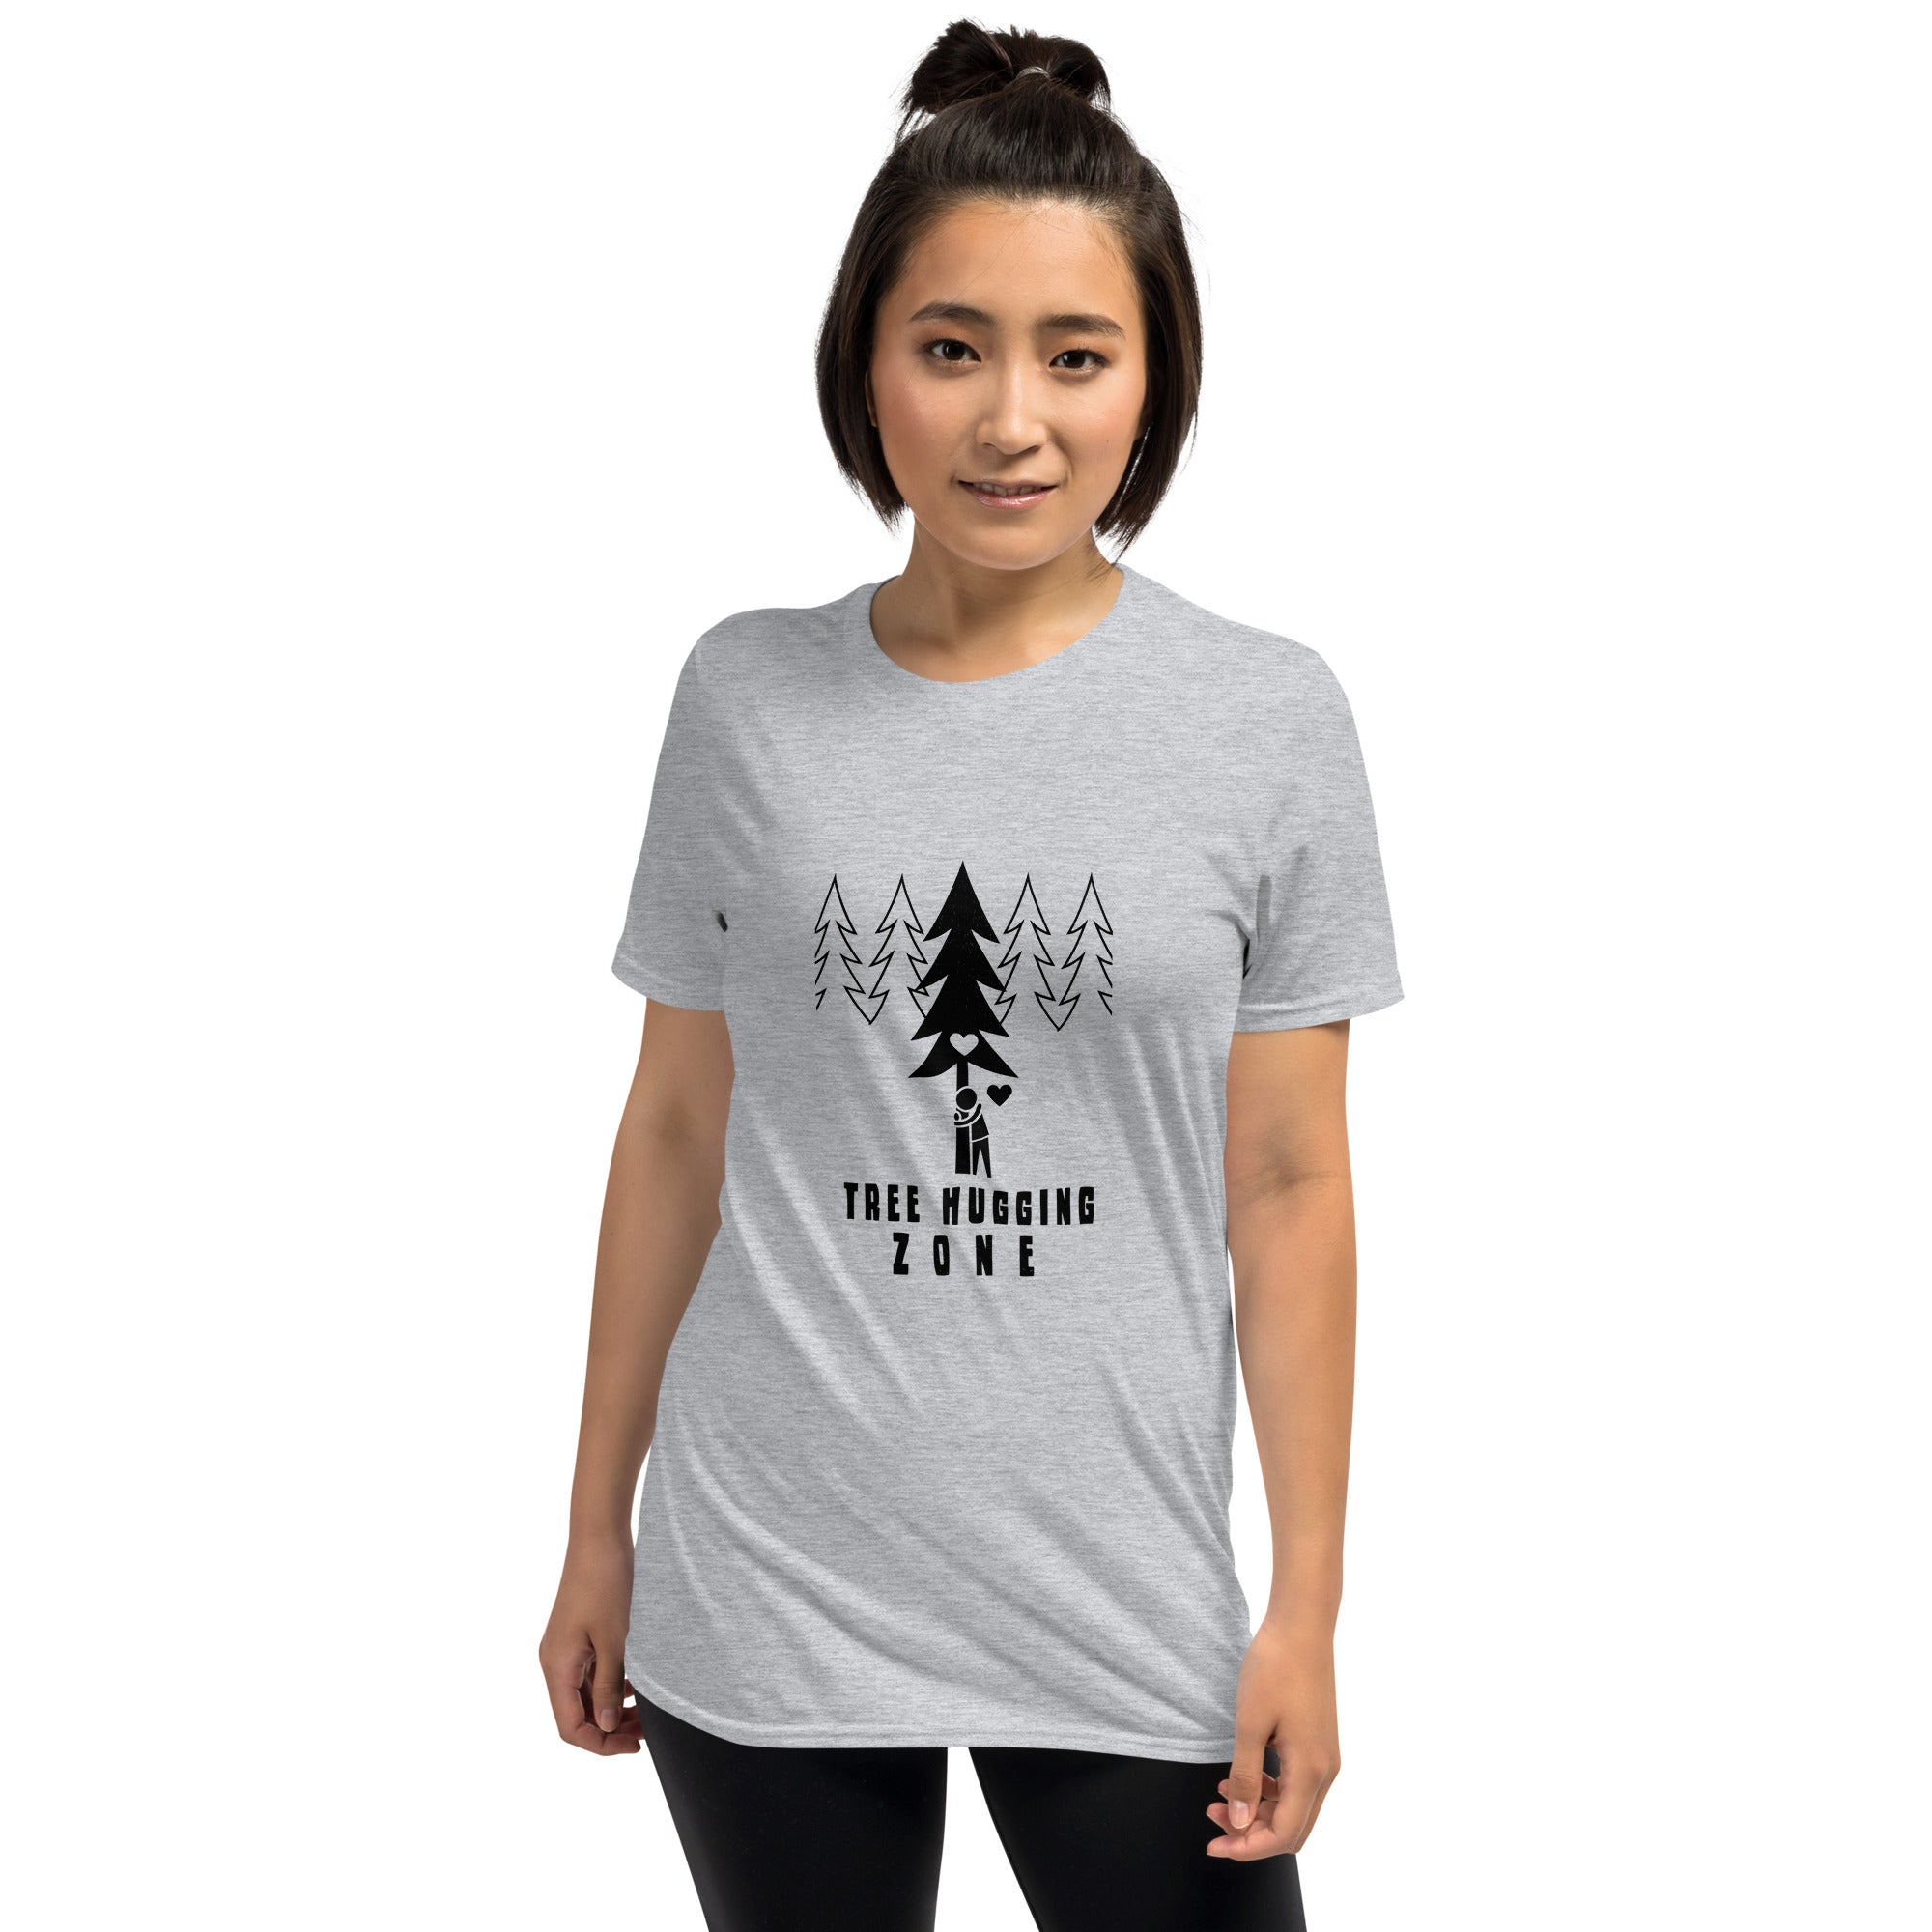 Softstyle Cotton T-Shirt Tree hugging zone black